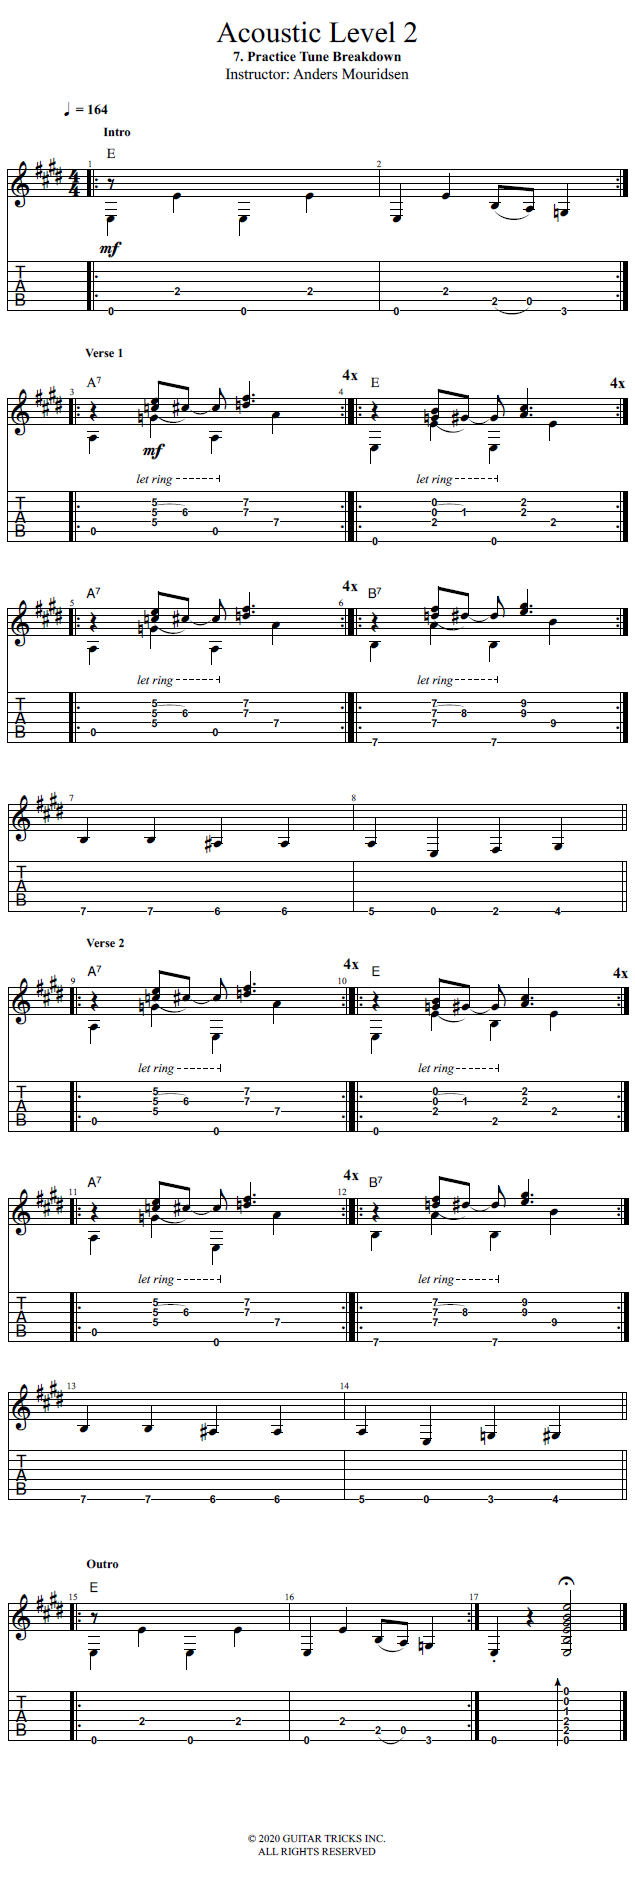 Practice Tune Breakdown song notation